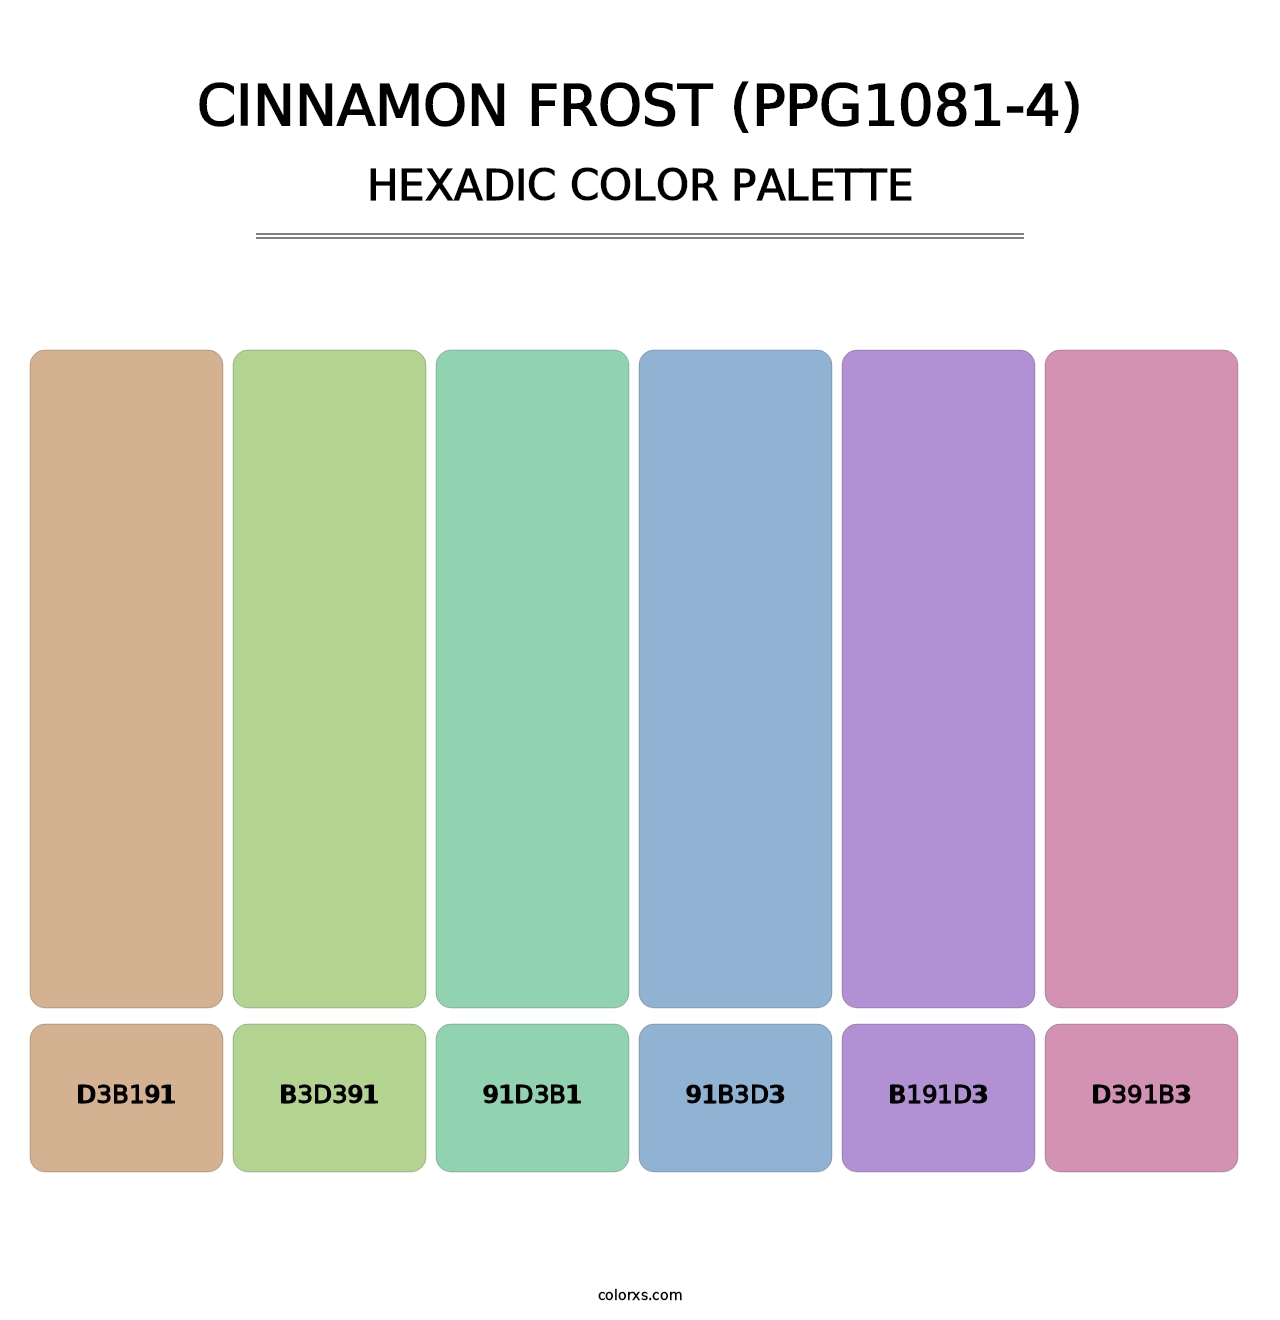 Cinnamon Frost (PPG1081-4) - Hexadic Color Palette